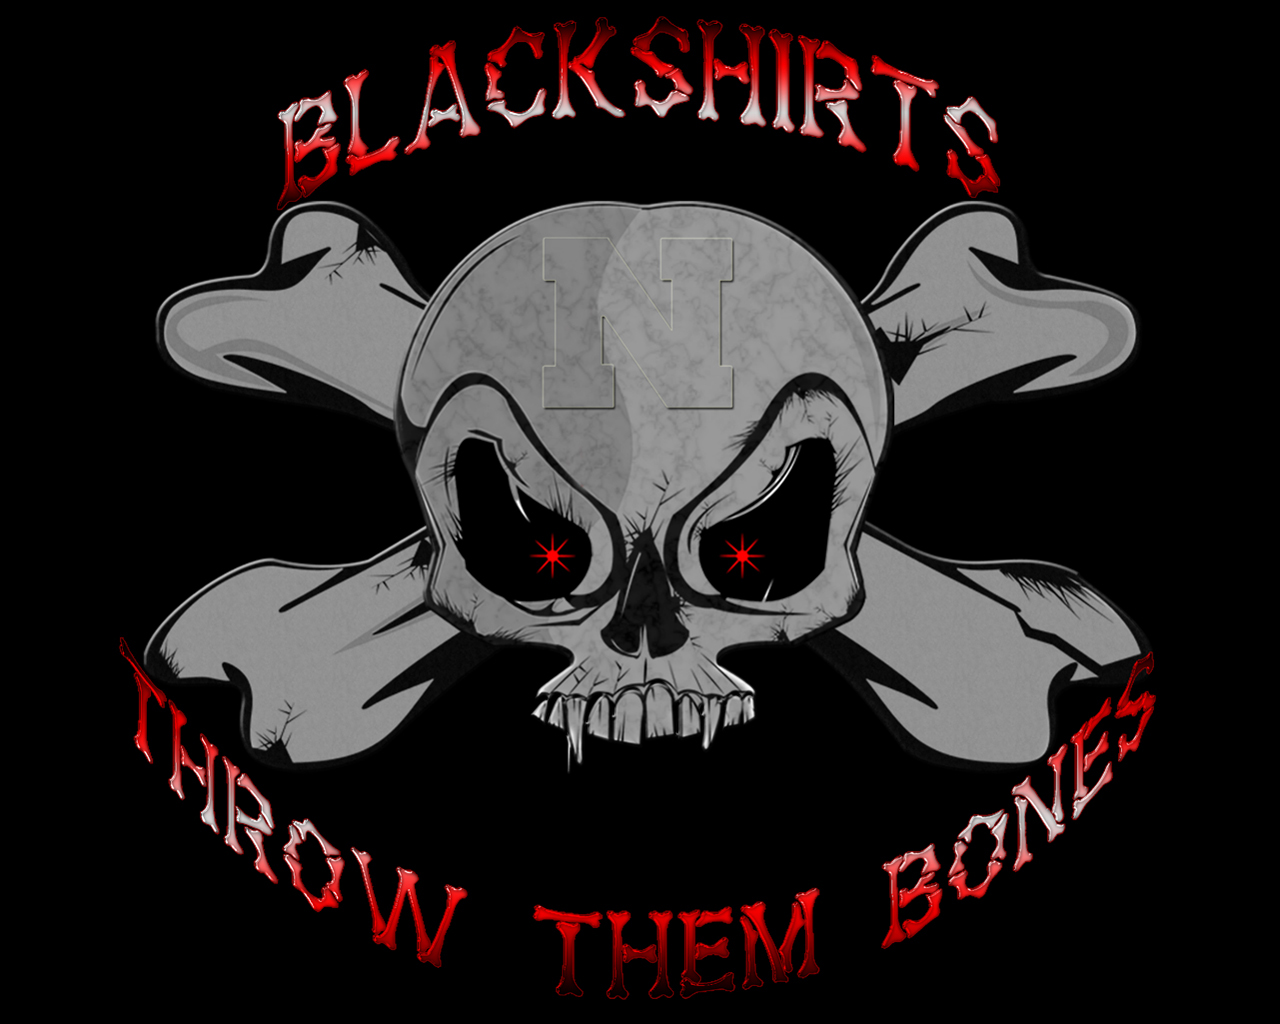 Blackshirt S Throw Them Bones Blackout X